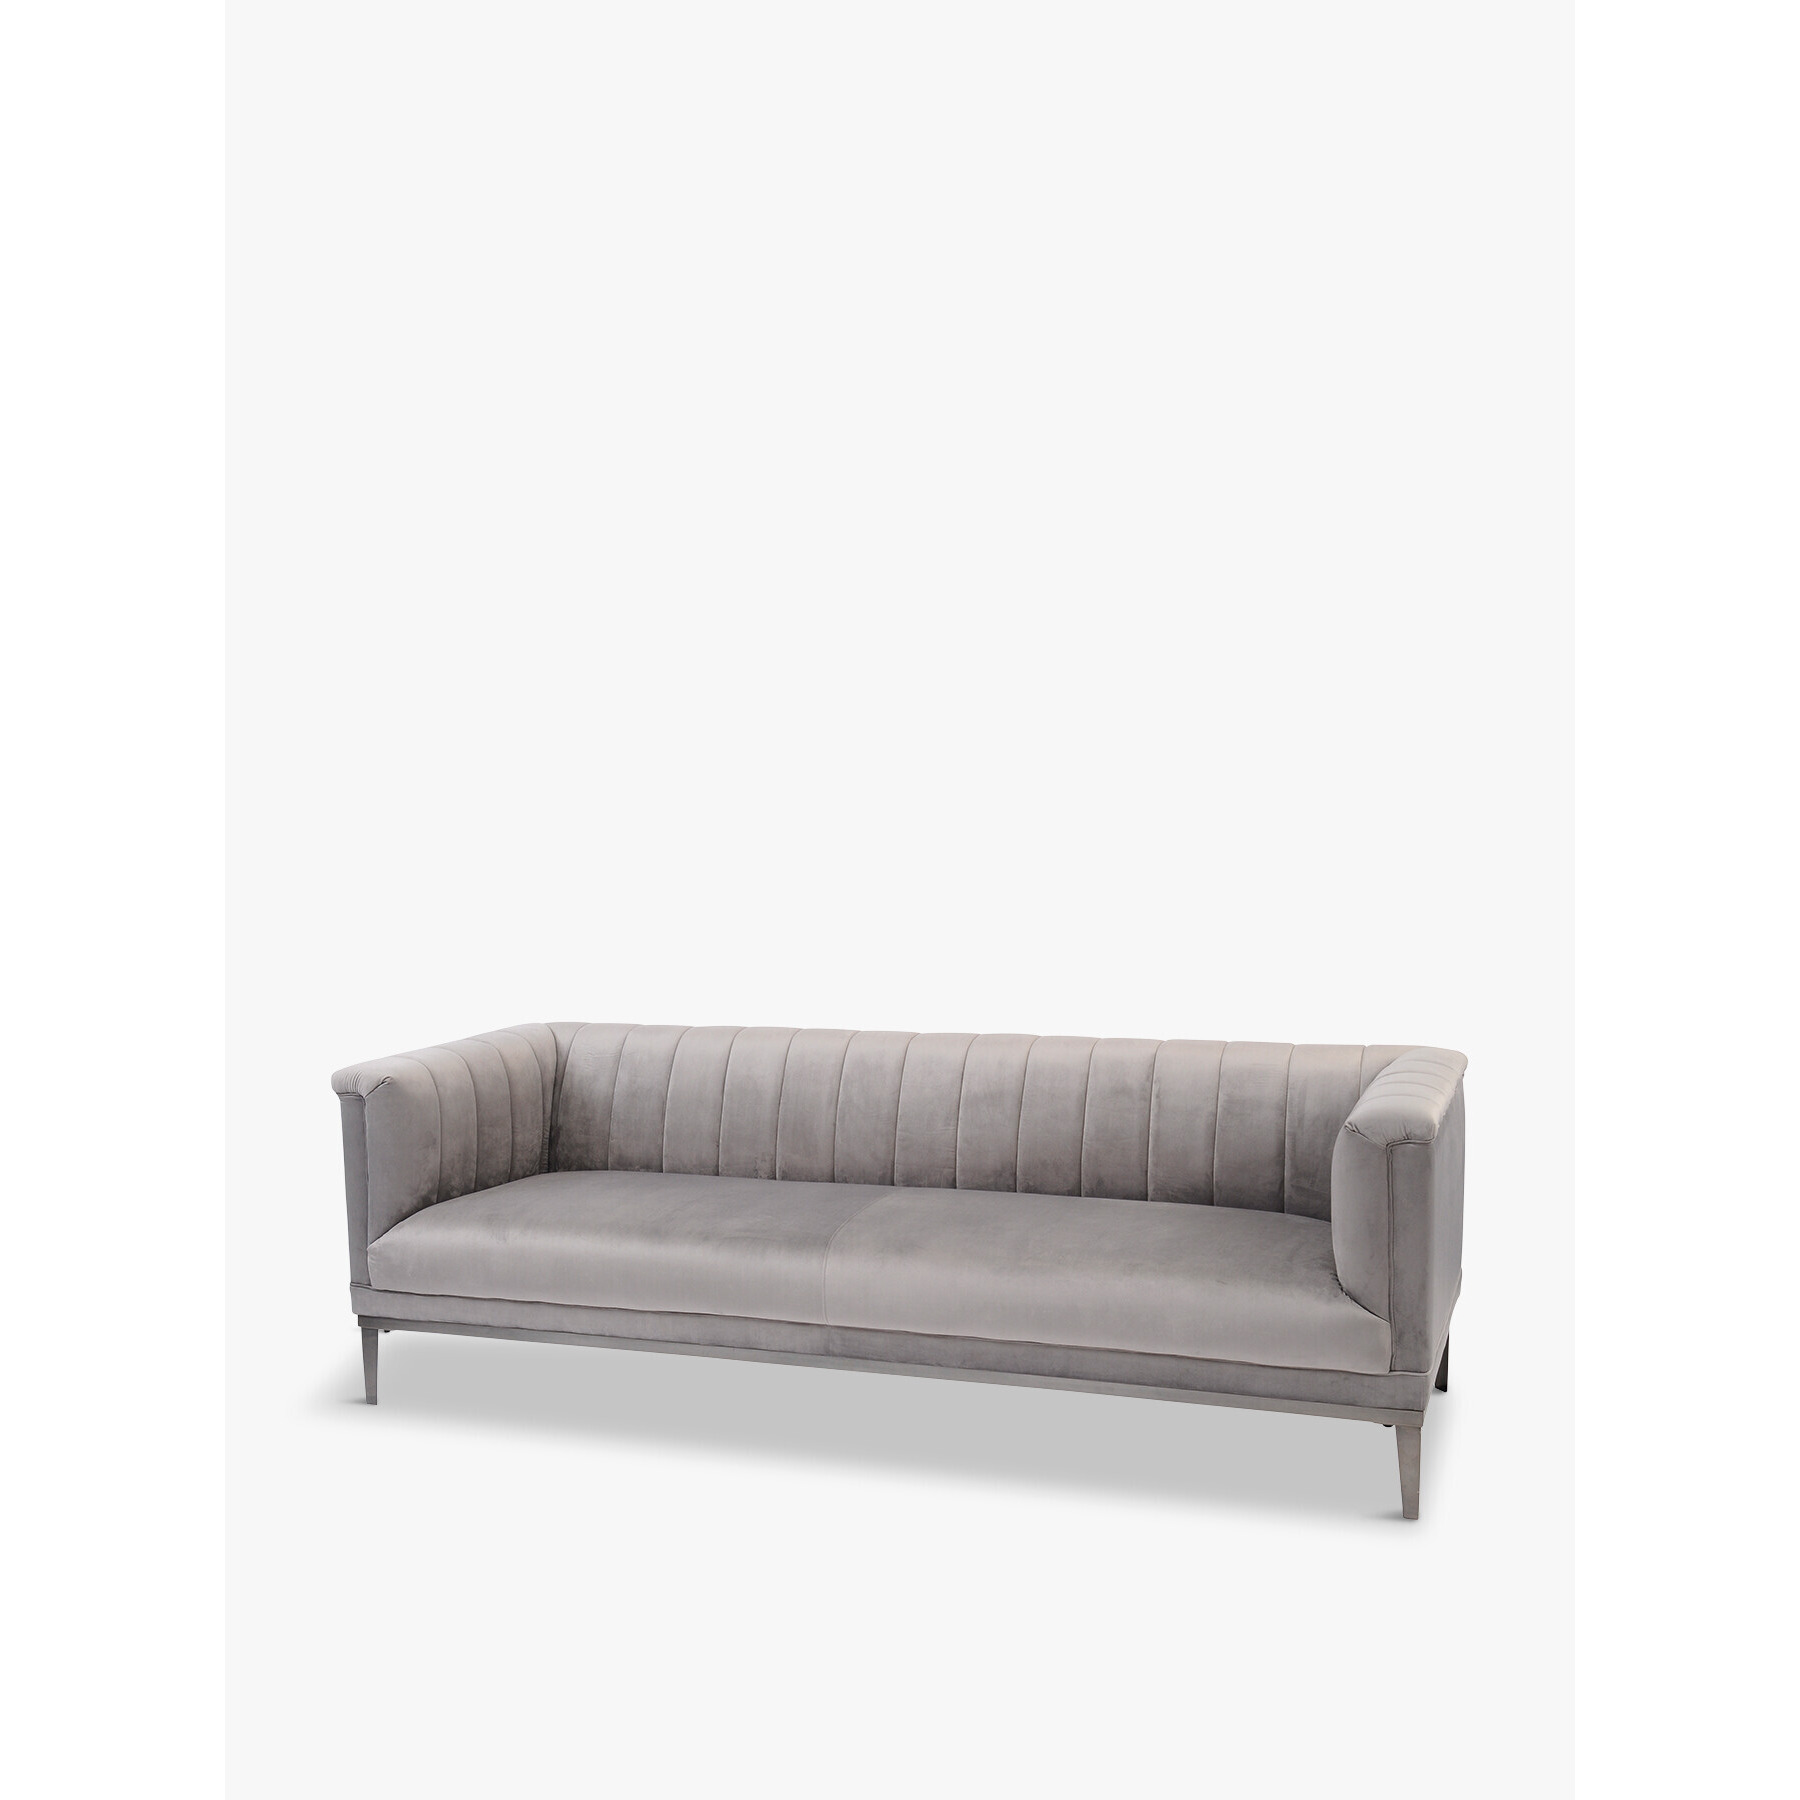 Libra Interiors Belgravia Grey Three Seater Ribbed Sofa - Size 73x223x83 - image 1